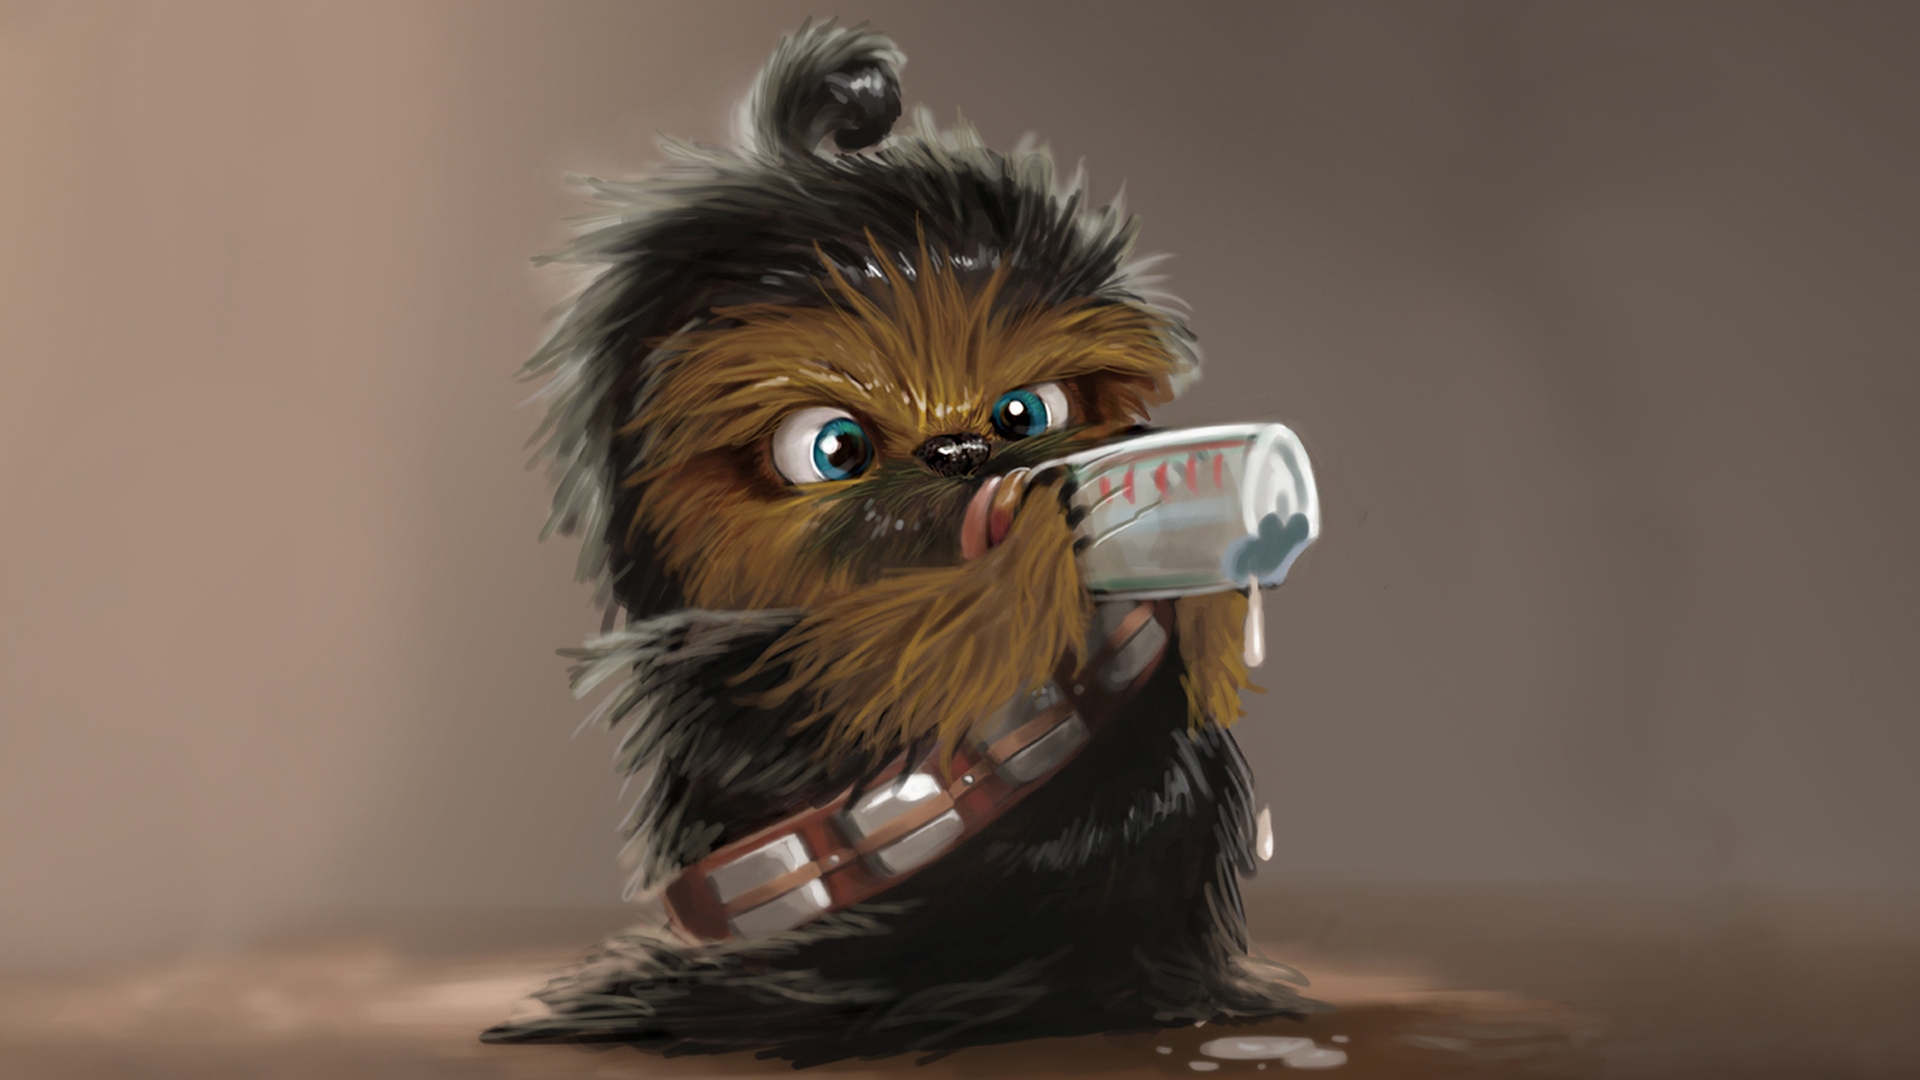 Wallpaper Star Wars Chewbacca Drink Baby Full HD